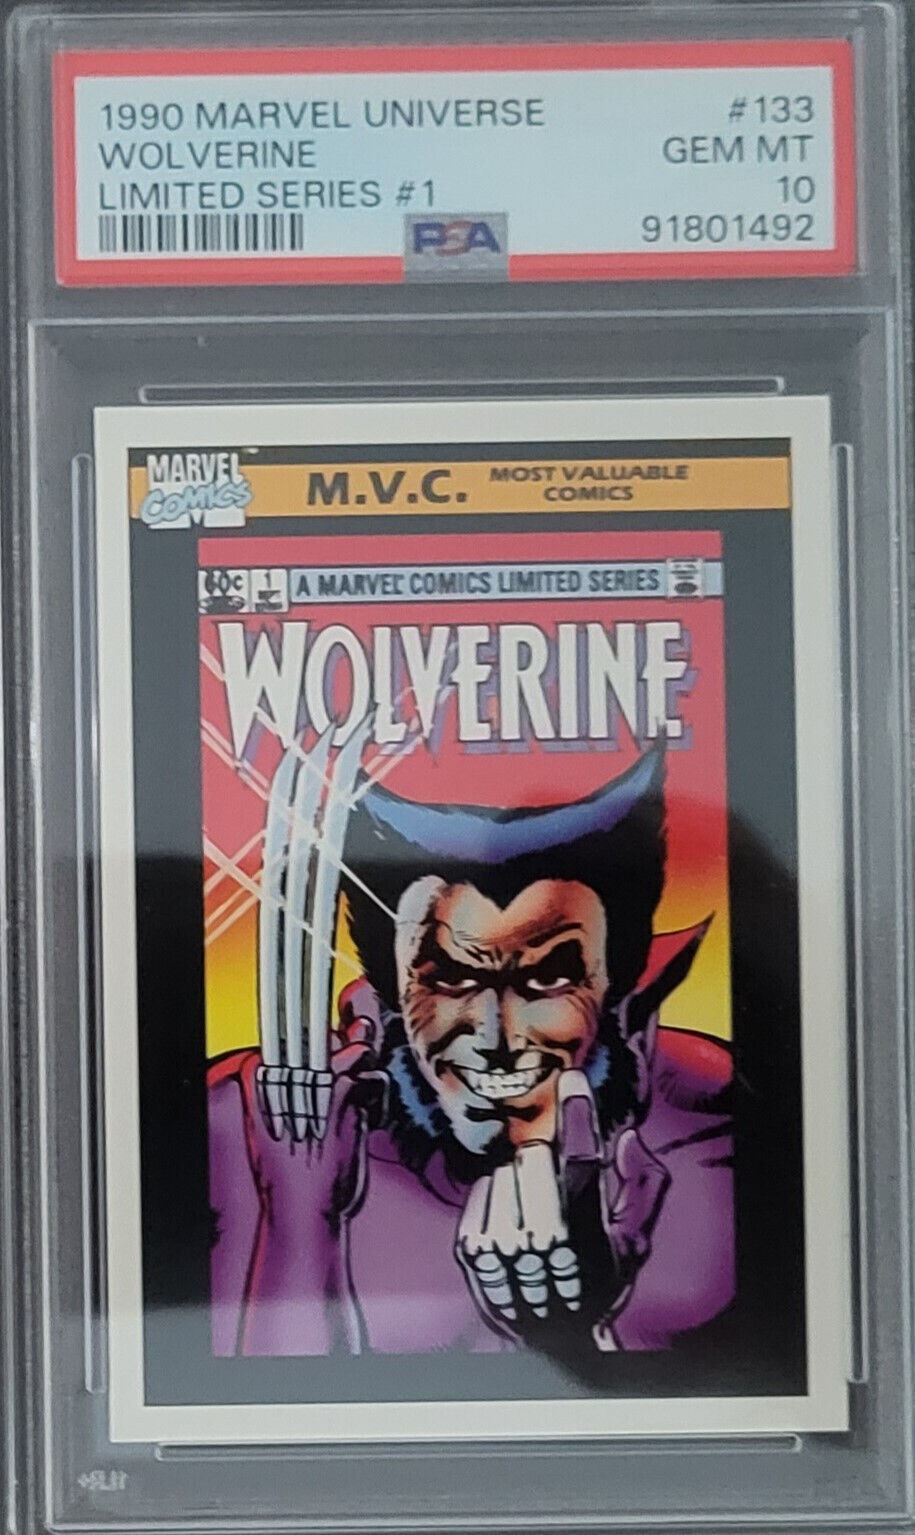 1990 Impel Marvel Universe Wolverine MVC Limited Series #1 #133 PSA 10 GEM MT